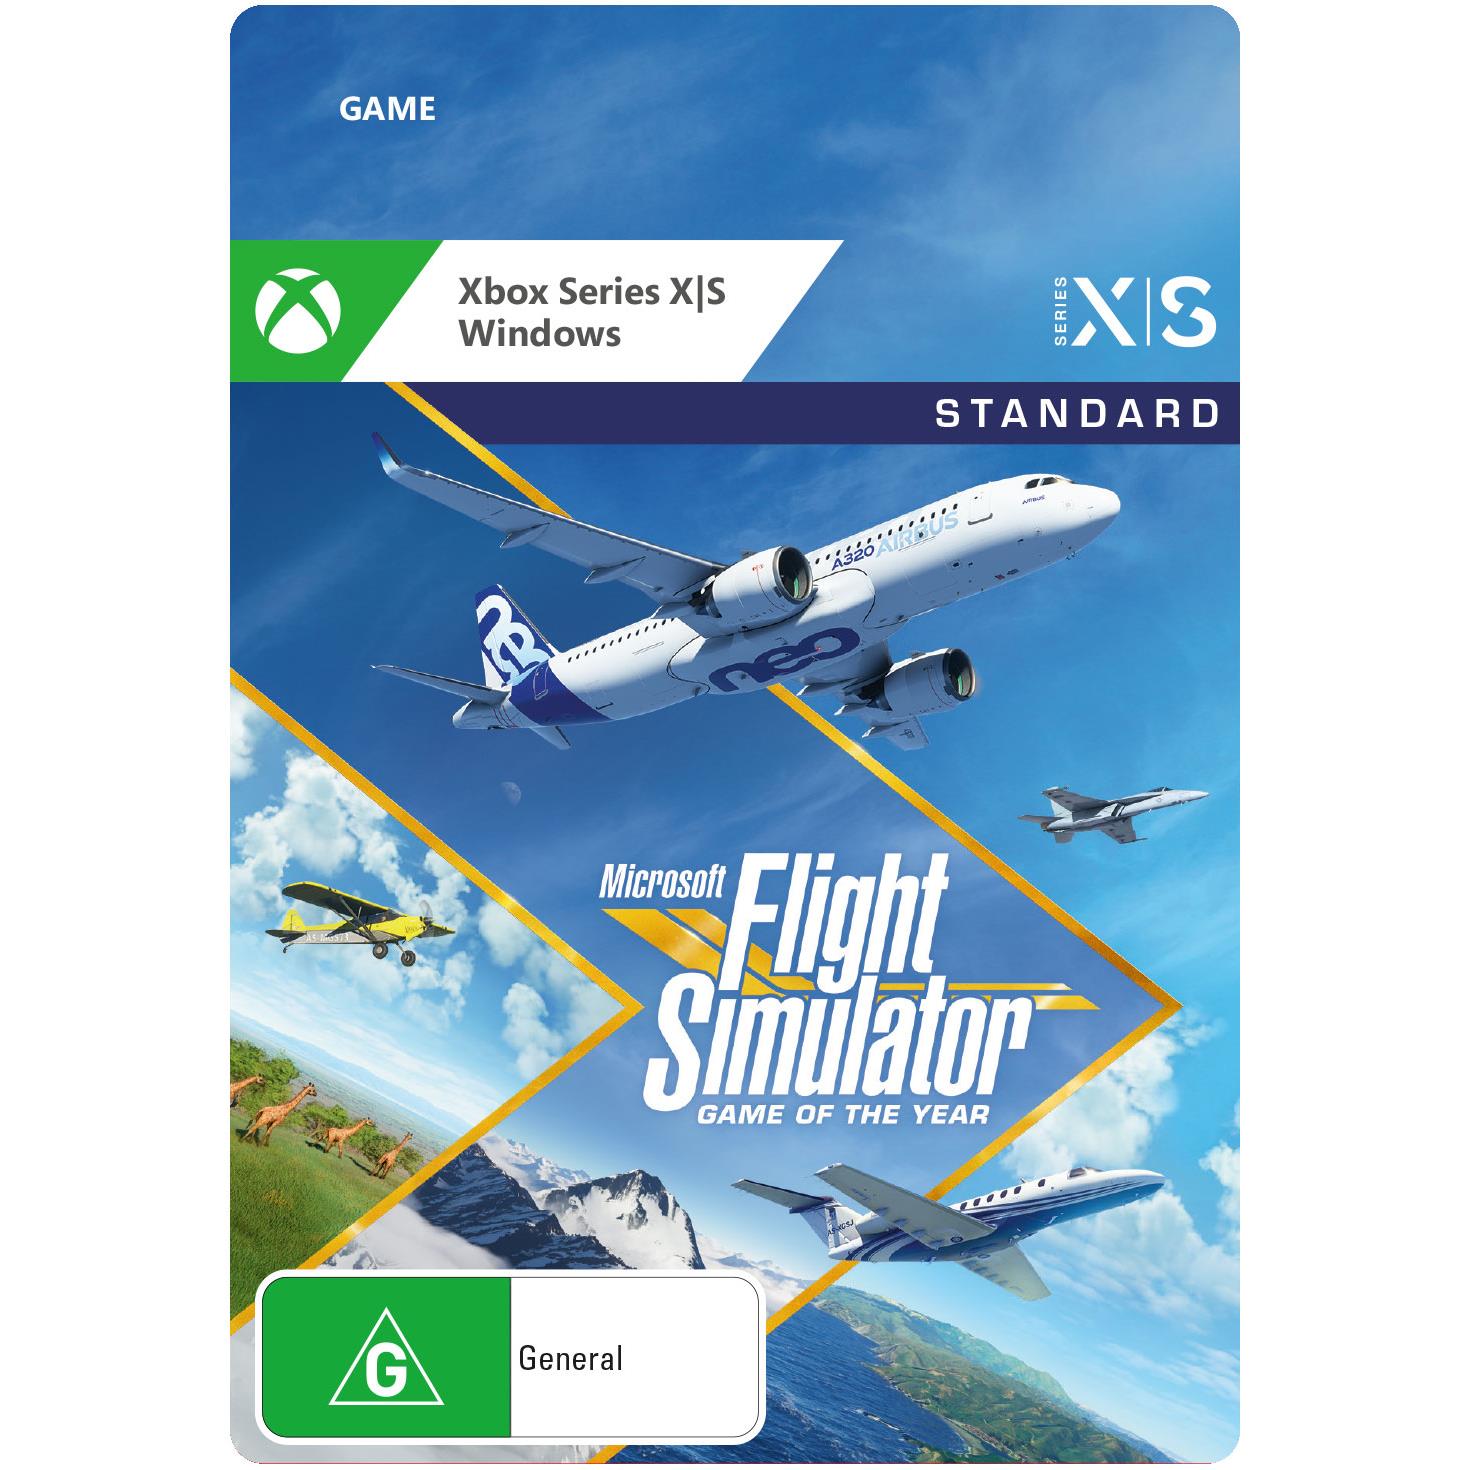 Microsoft Flight Simulator - Download